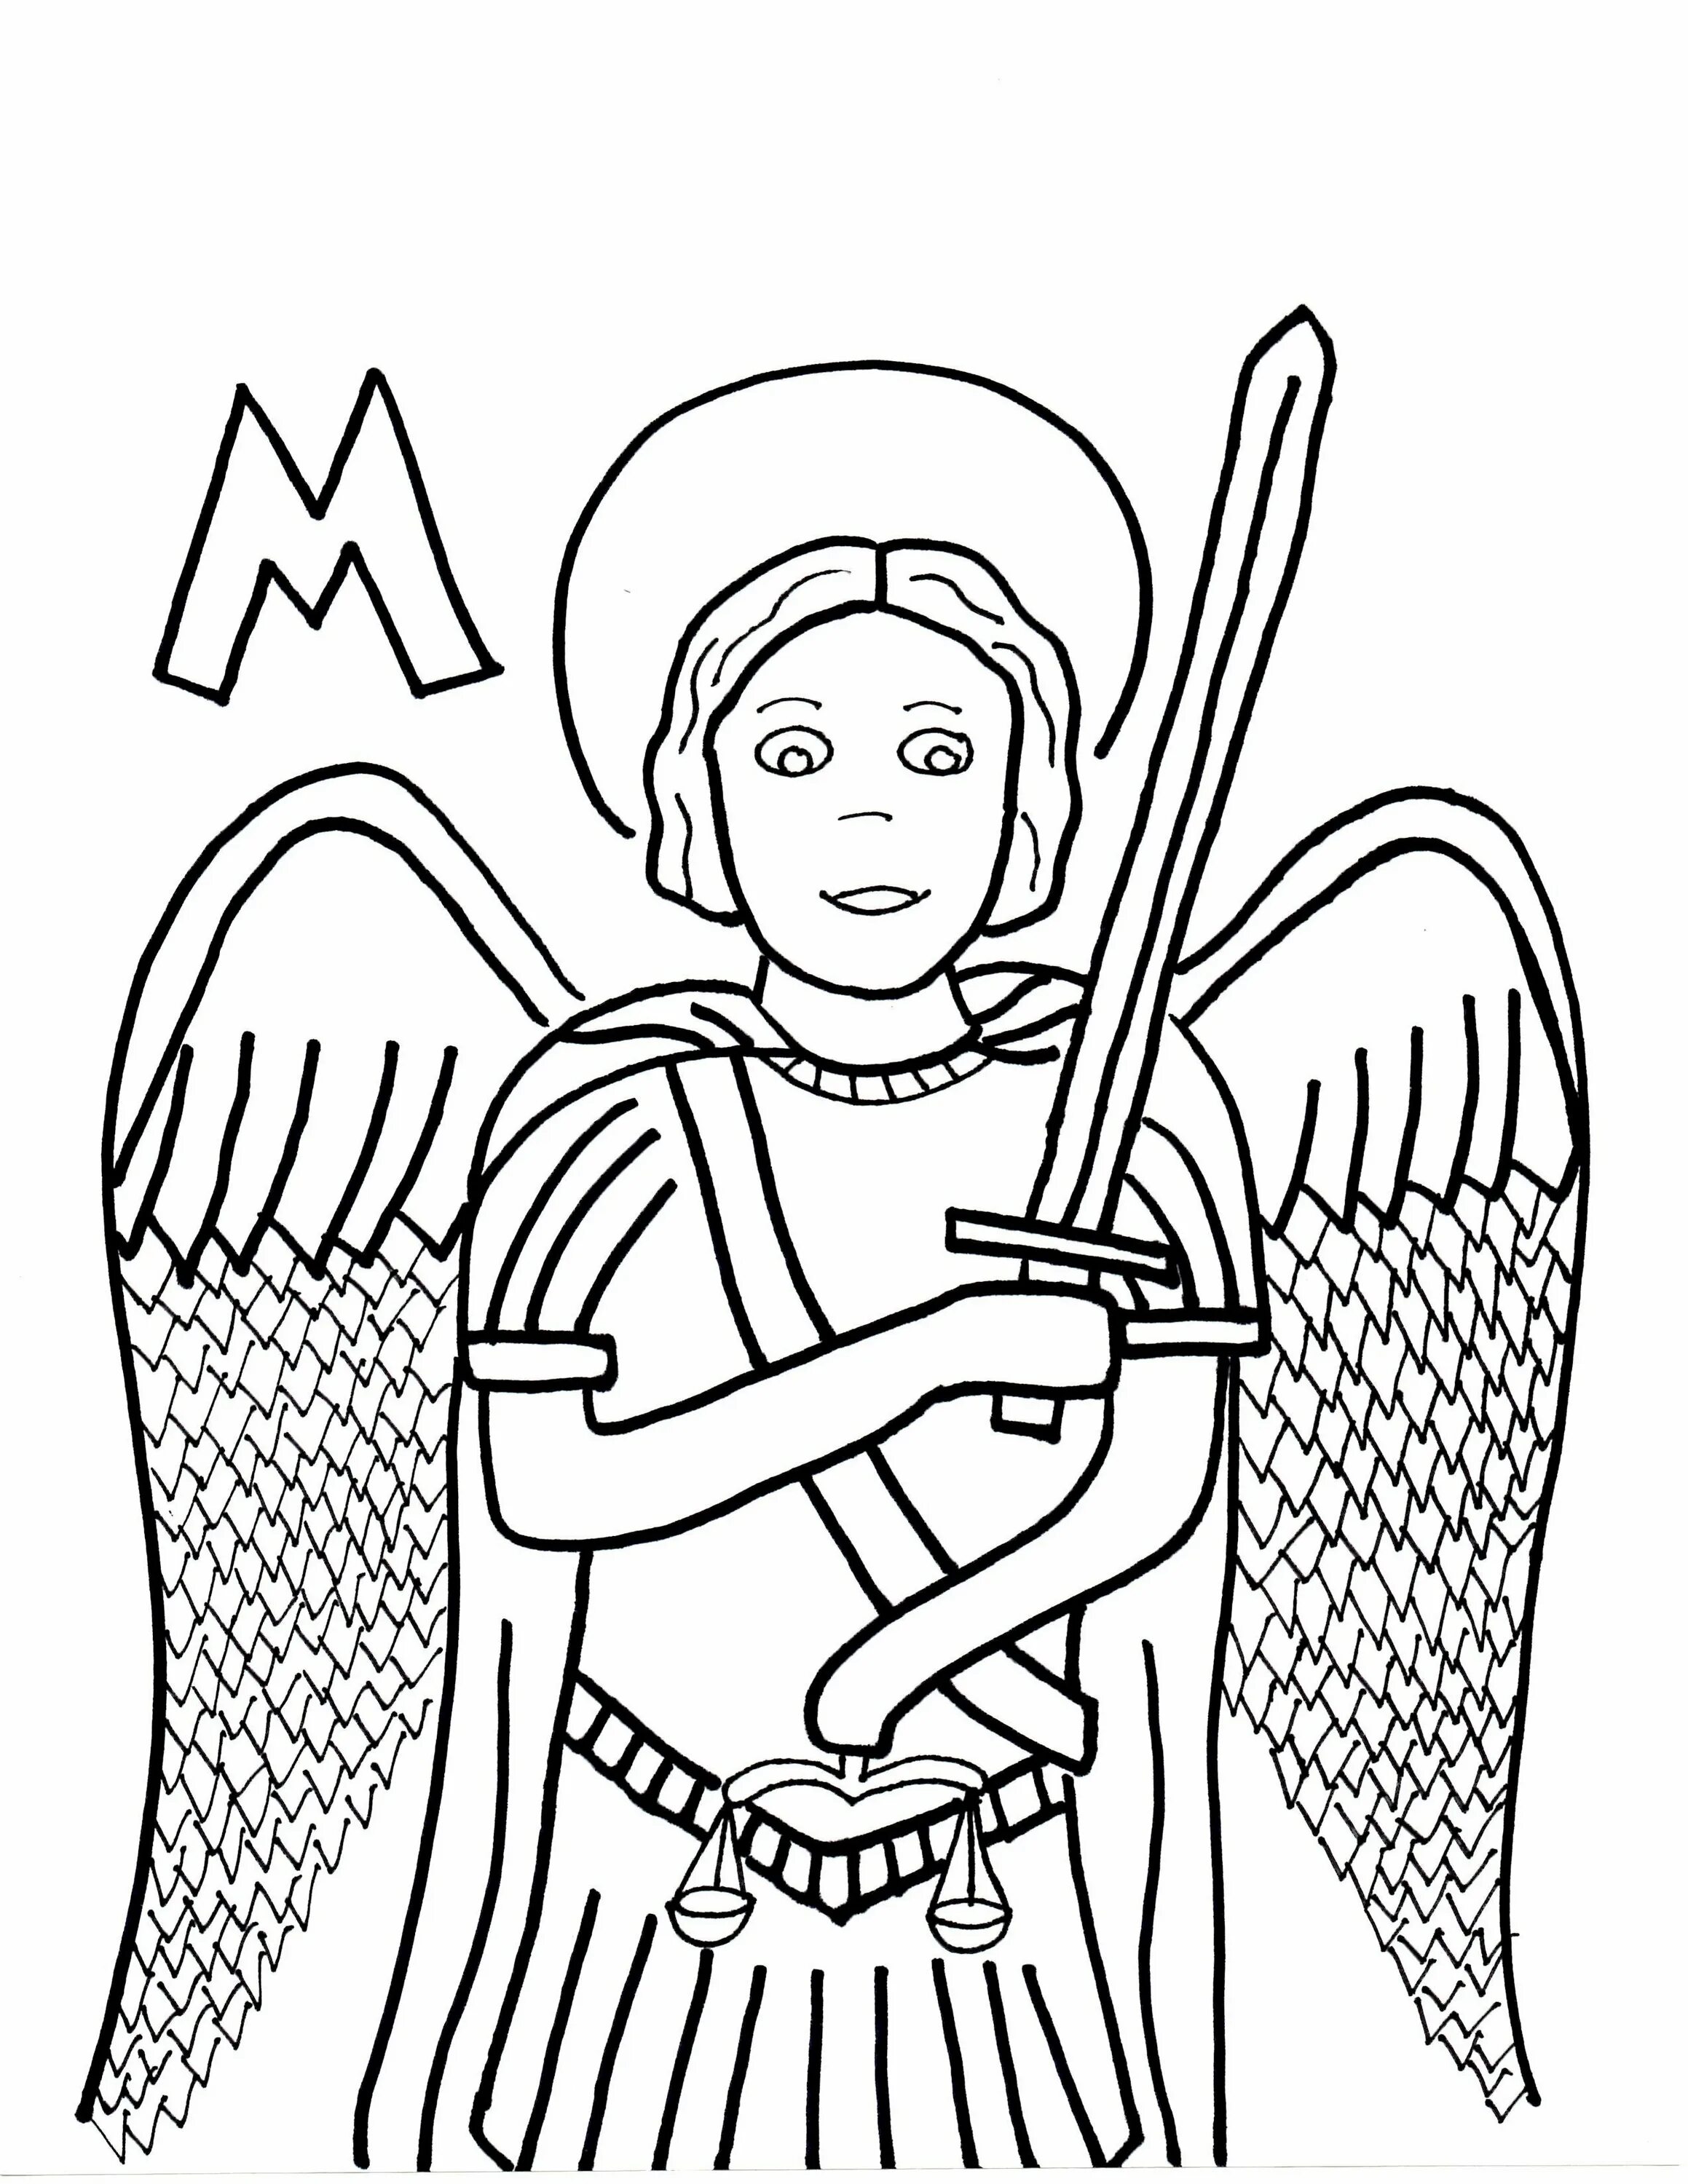 Coloring book magnanimous archangel michael